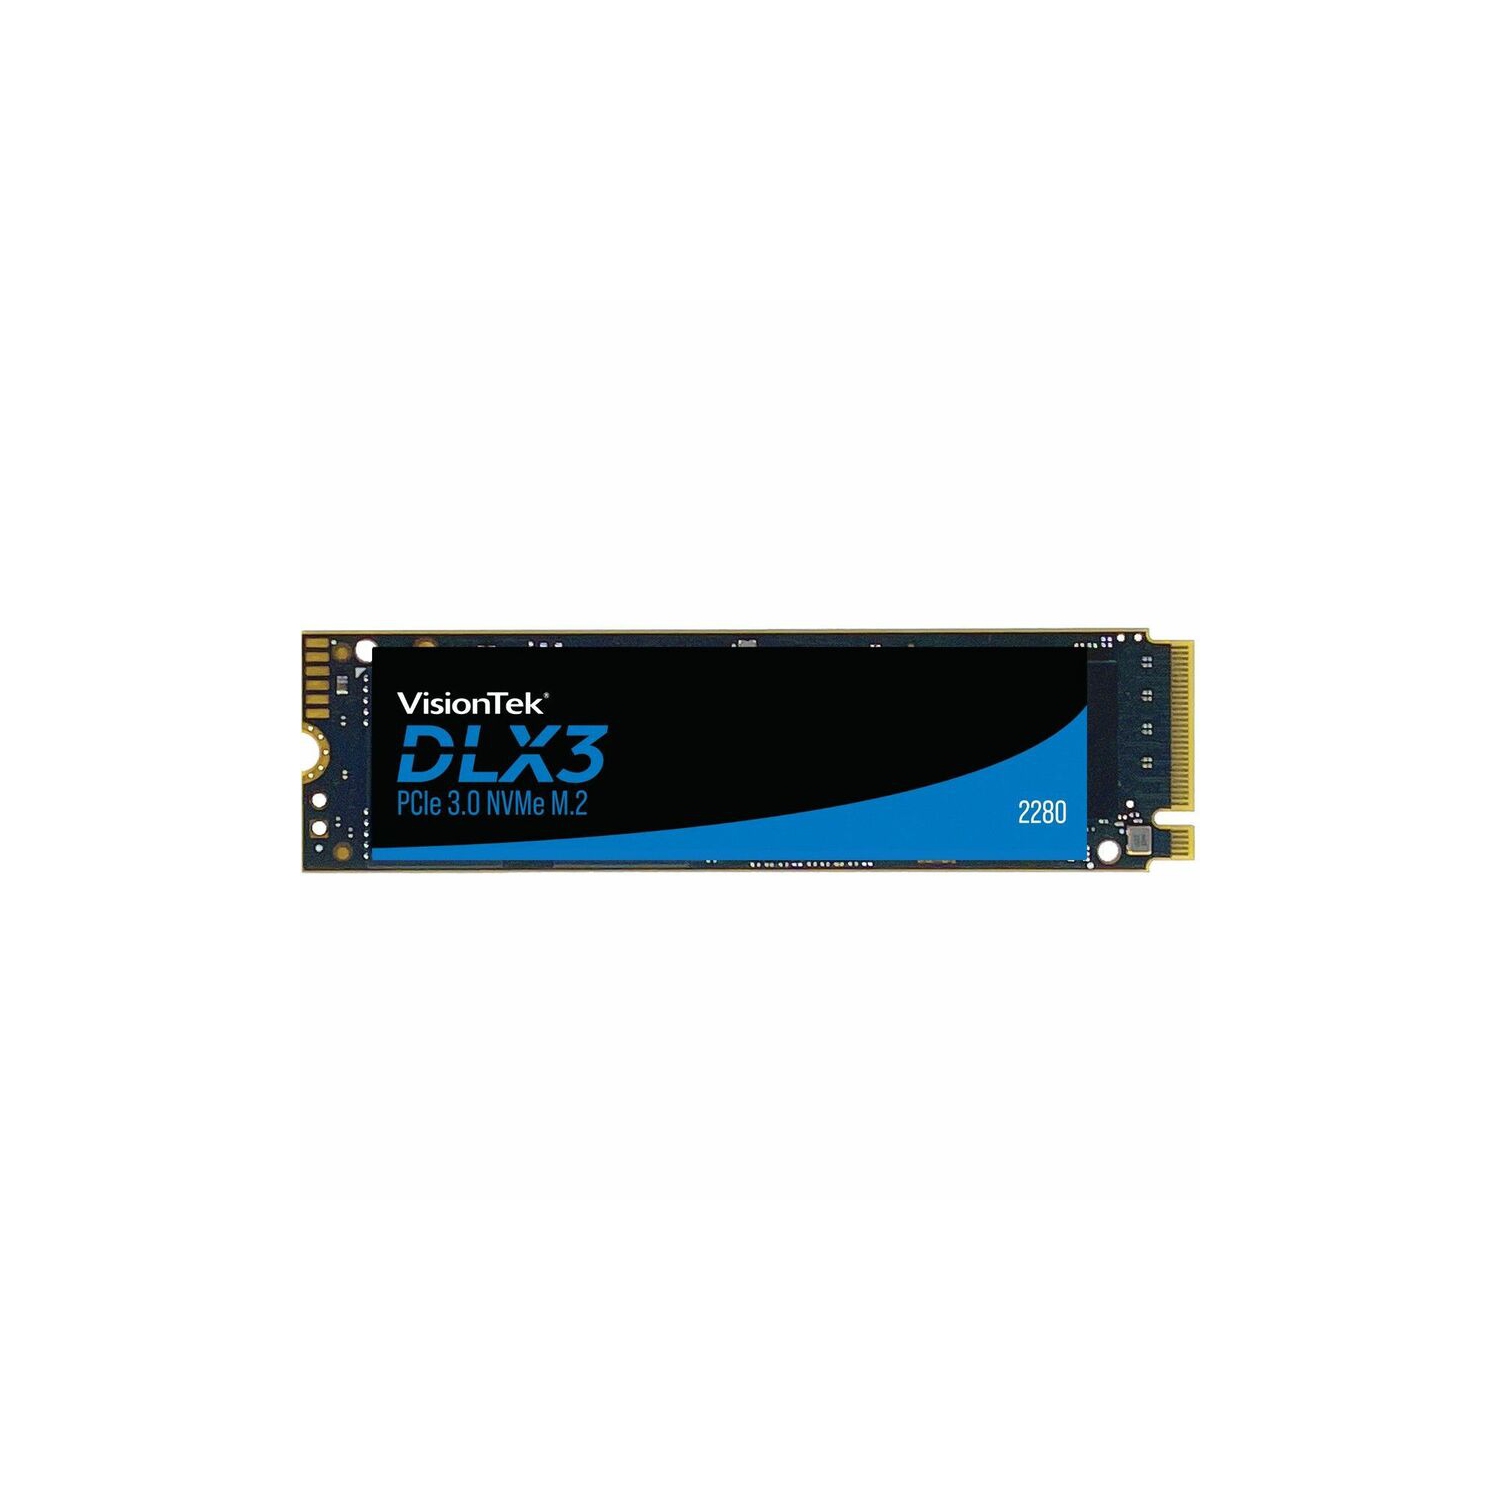 VisionTek DLX3 2280 M.2 PCIe 3.0 x4 SSD (NVMe) 901556